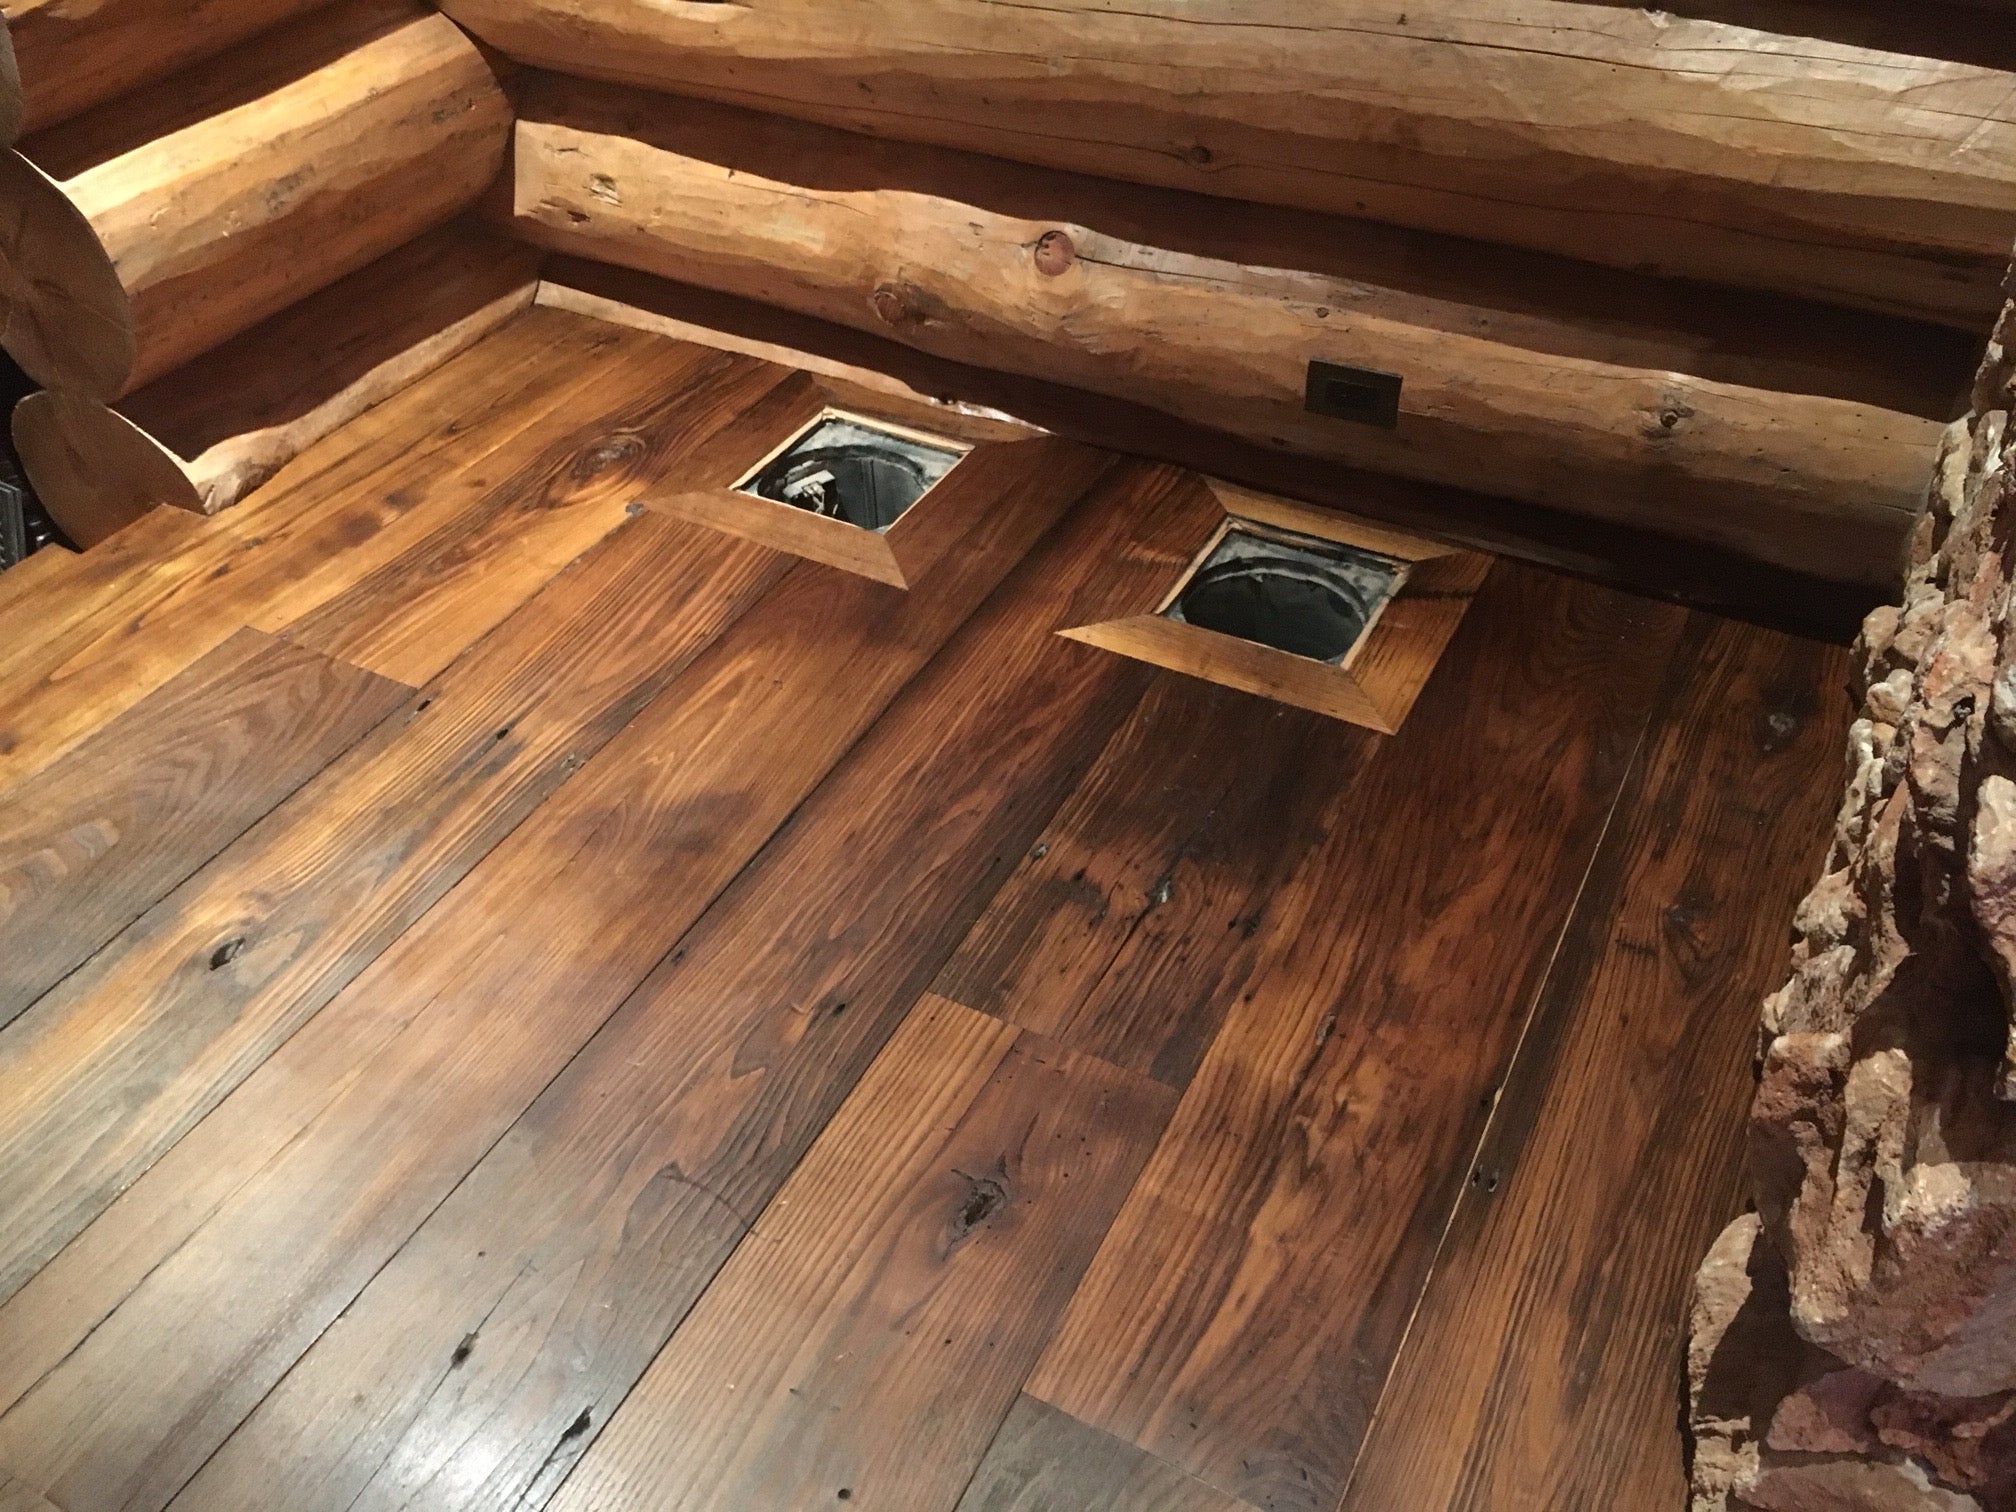 Repaired wood floor with Livos Kunos